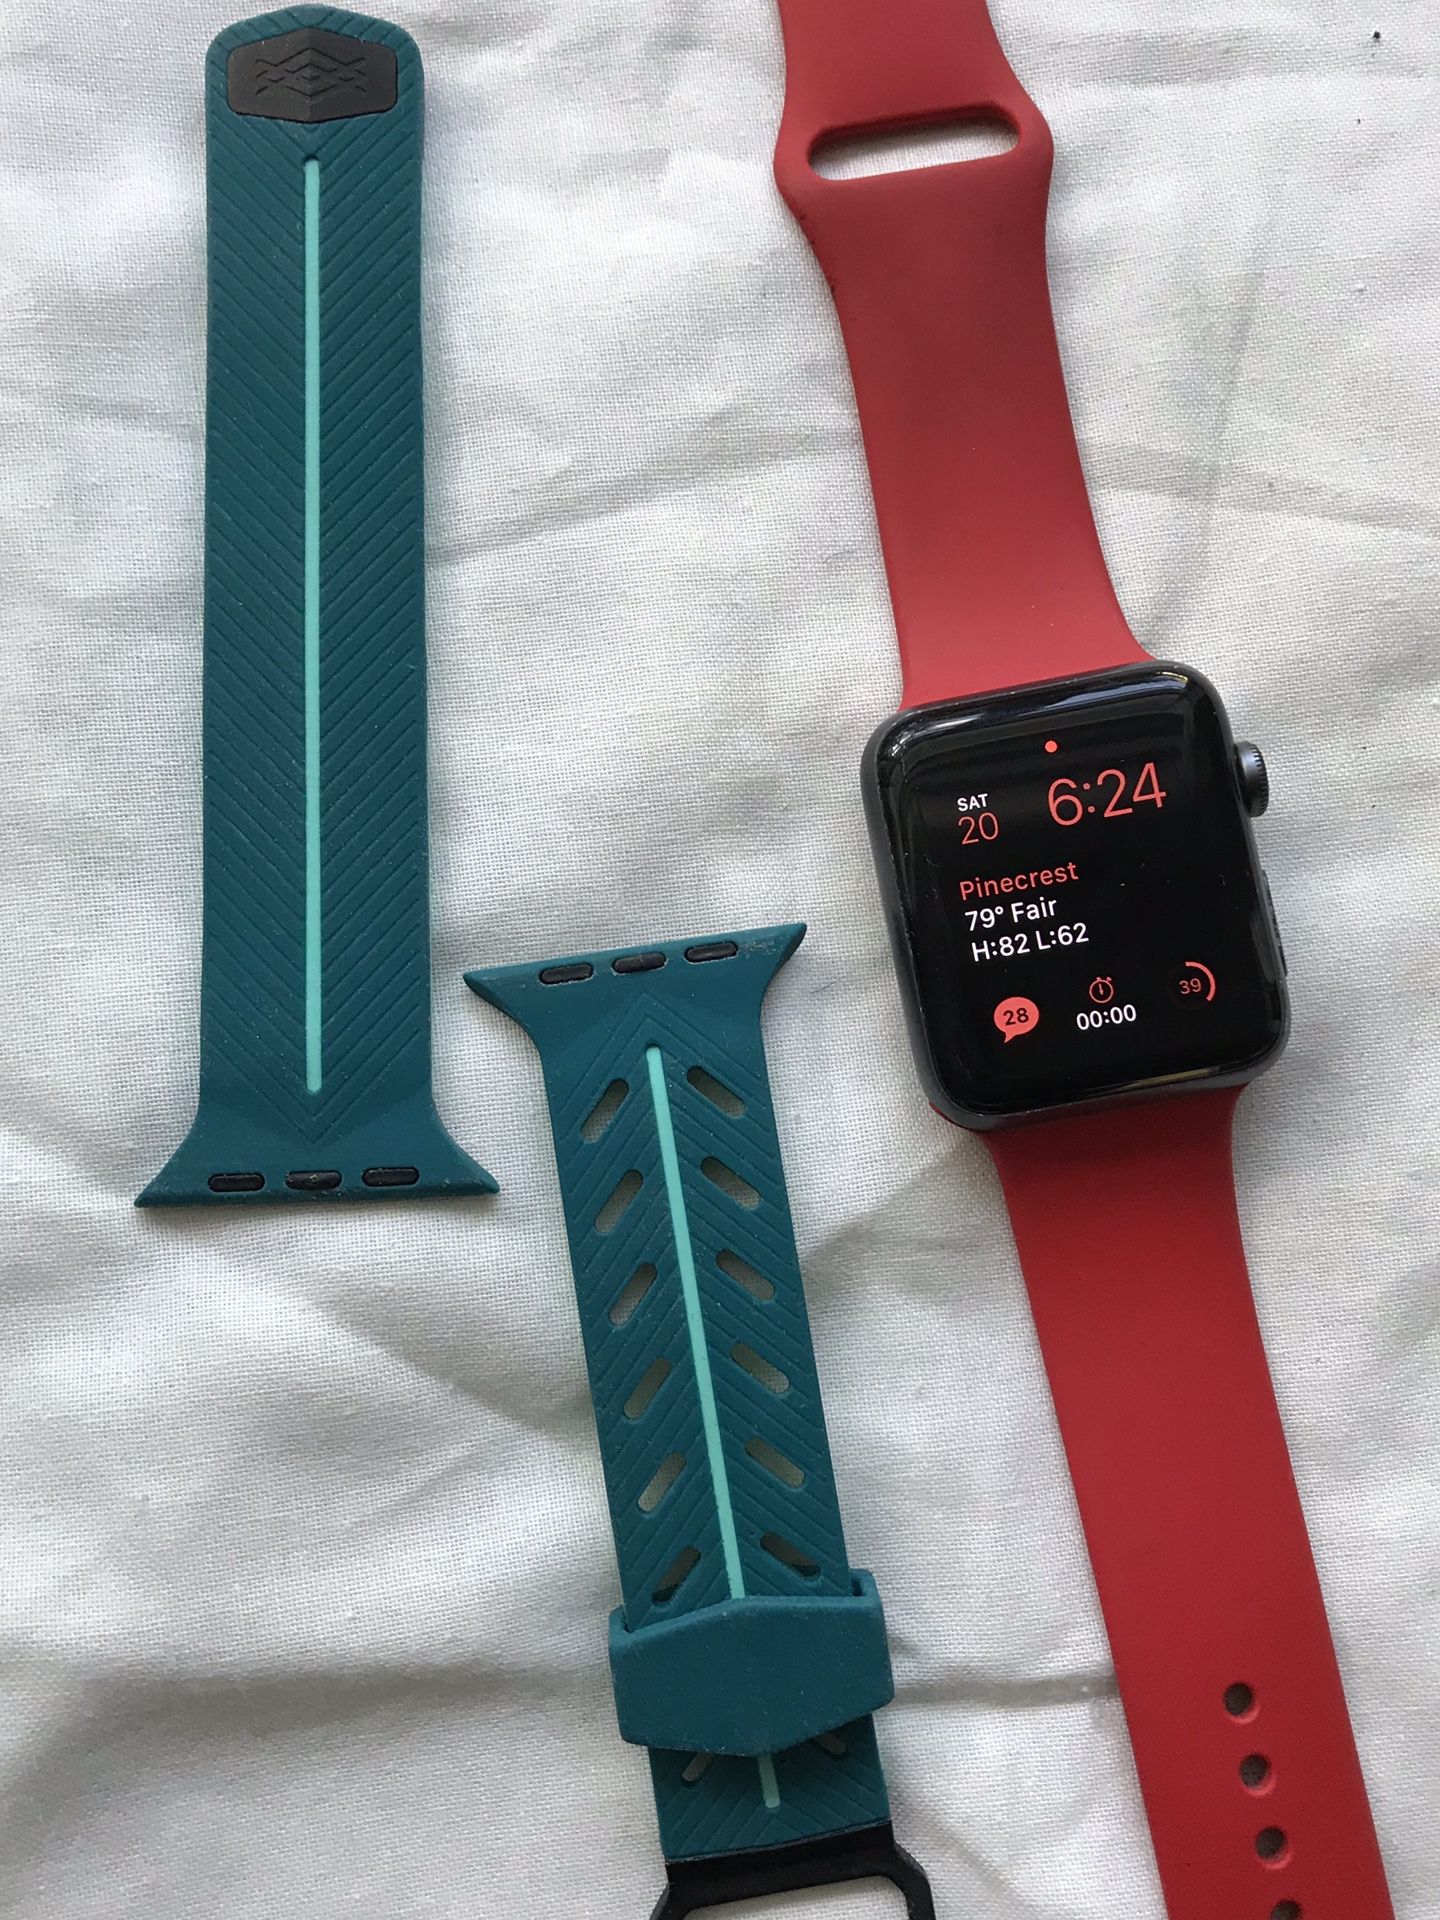 Apple Watch 2nd gen with 2 straps